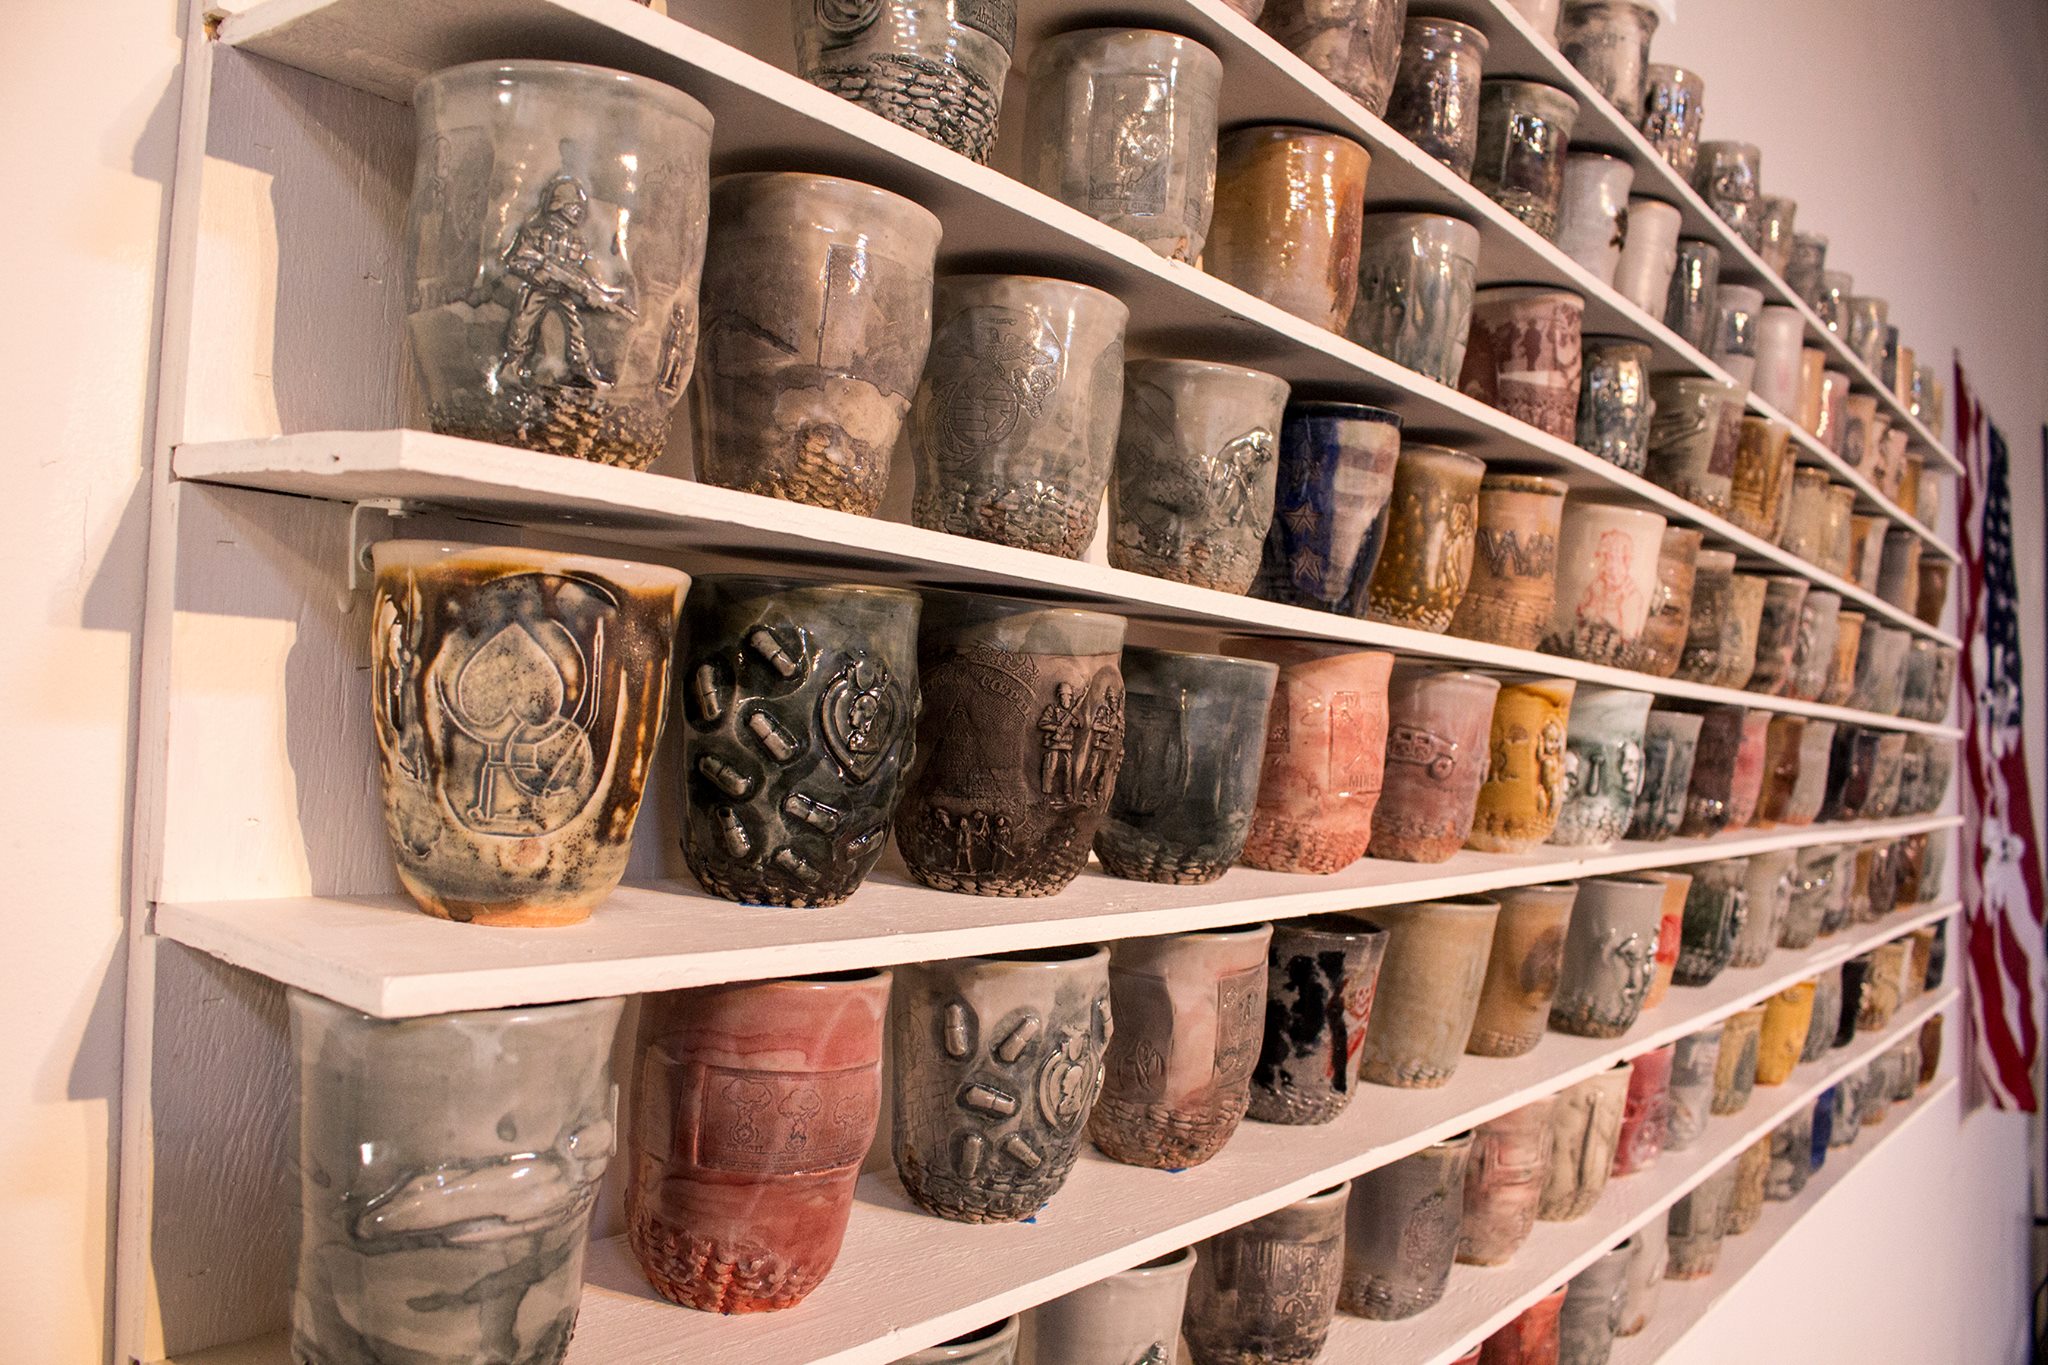 Cups by ceramic artist Ehren Tool